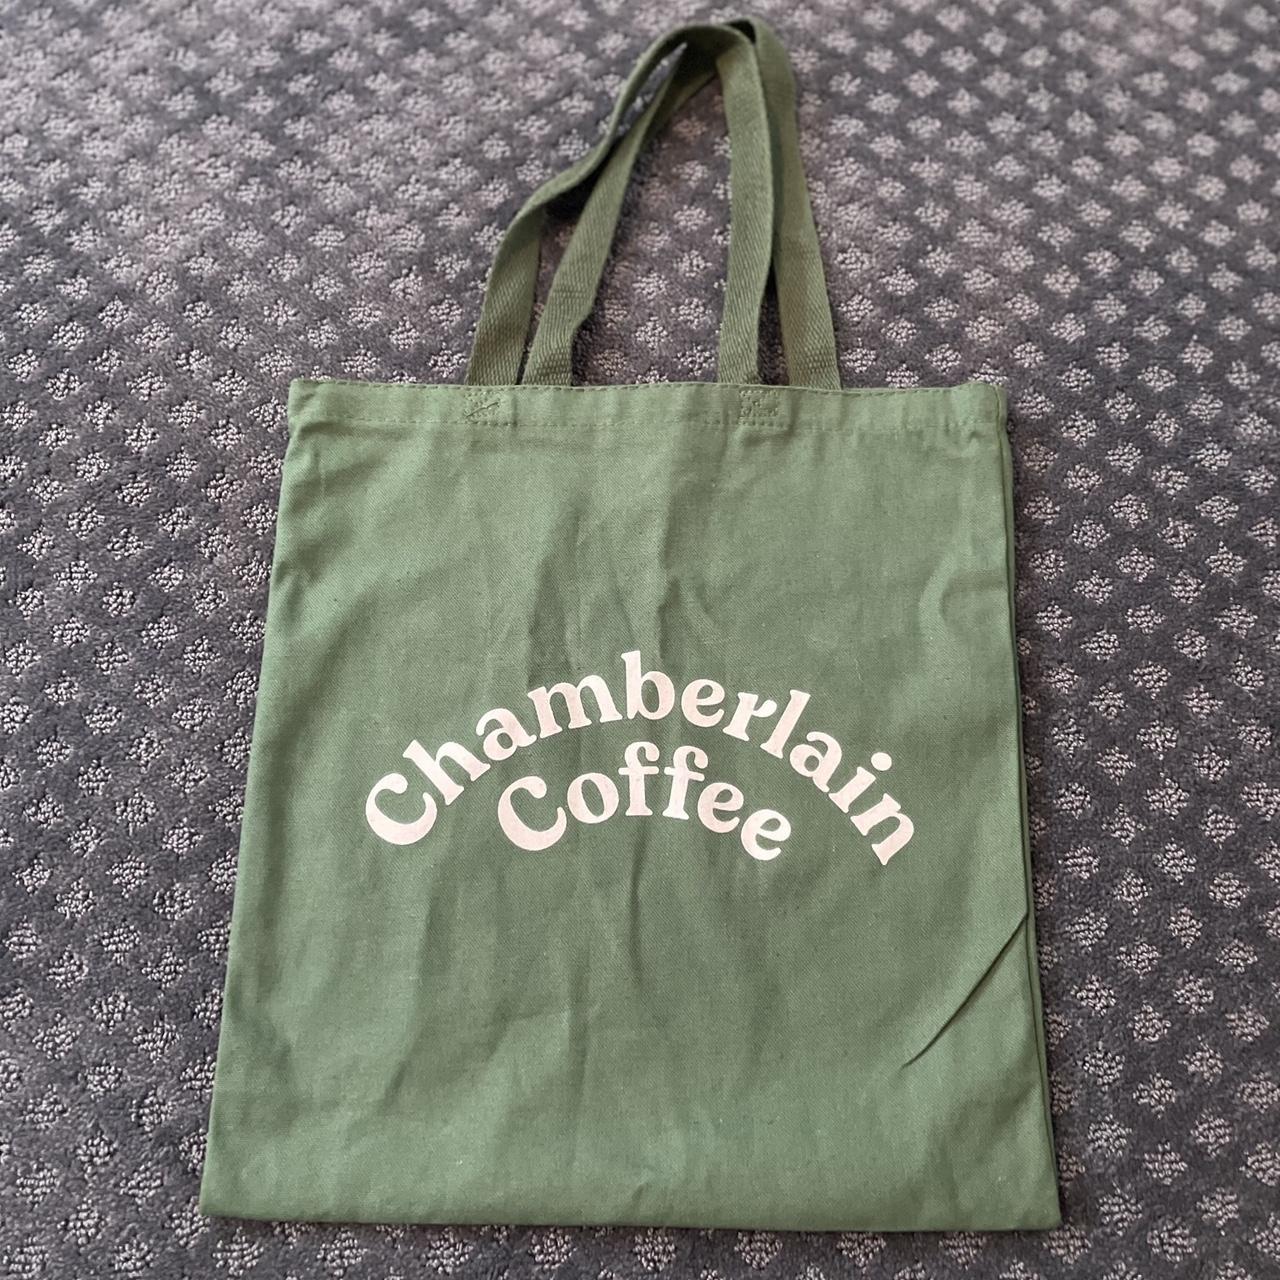 Chamberlain Coffee Women's Bag - Green